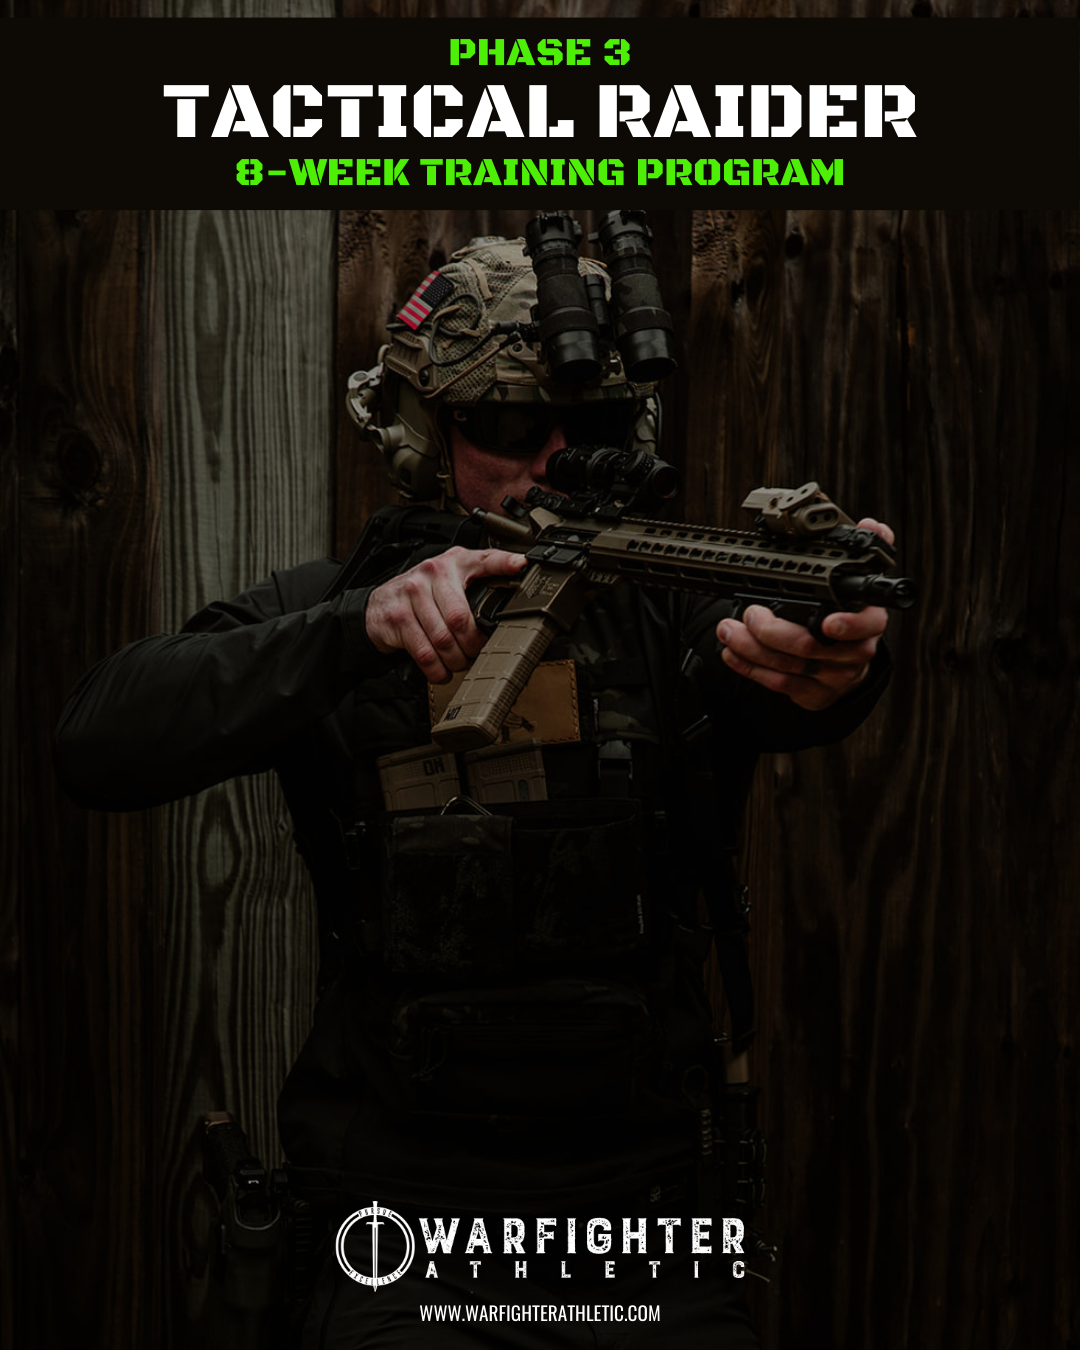 Phase 3 - Tactical Raider Program